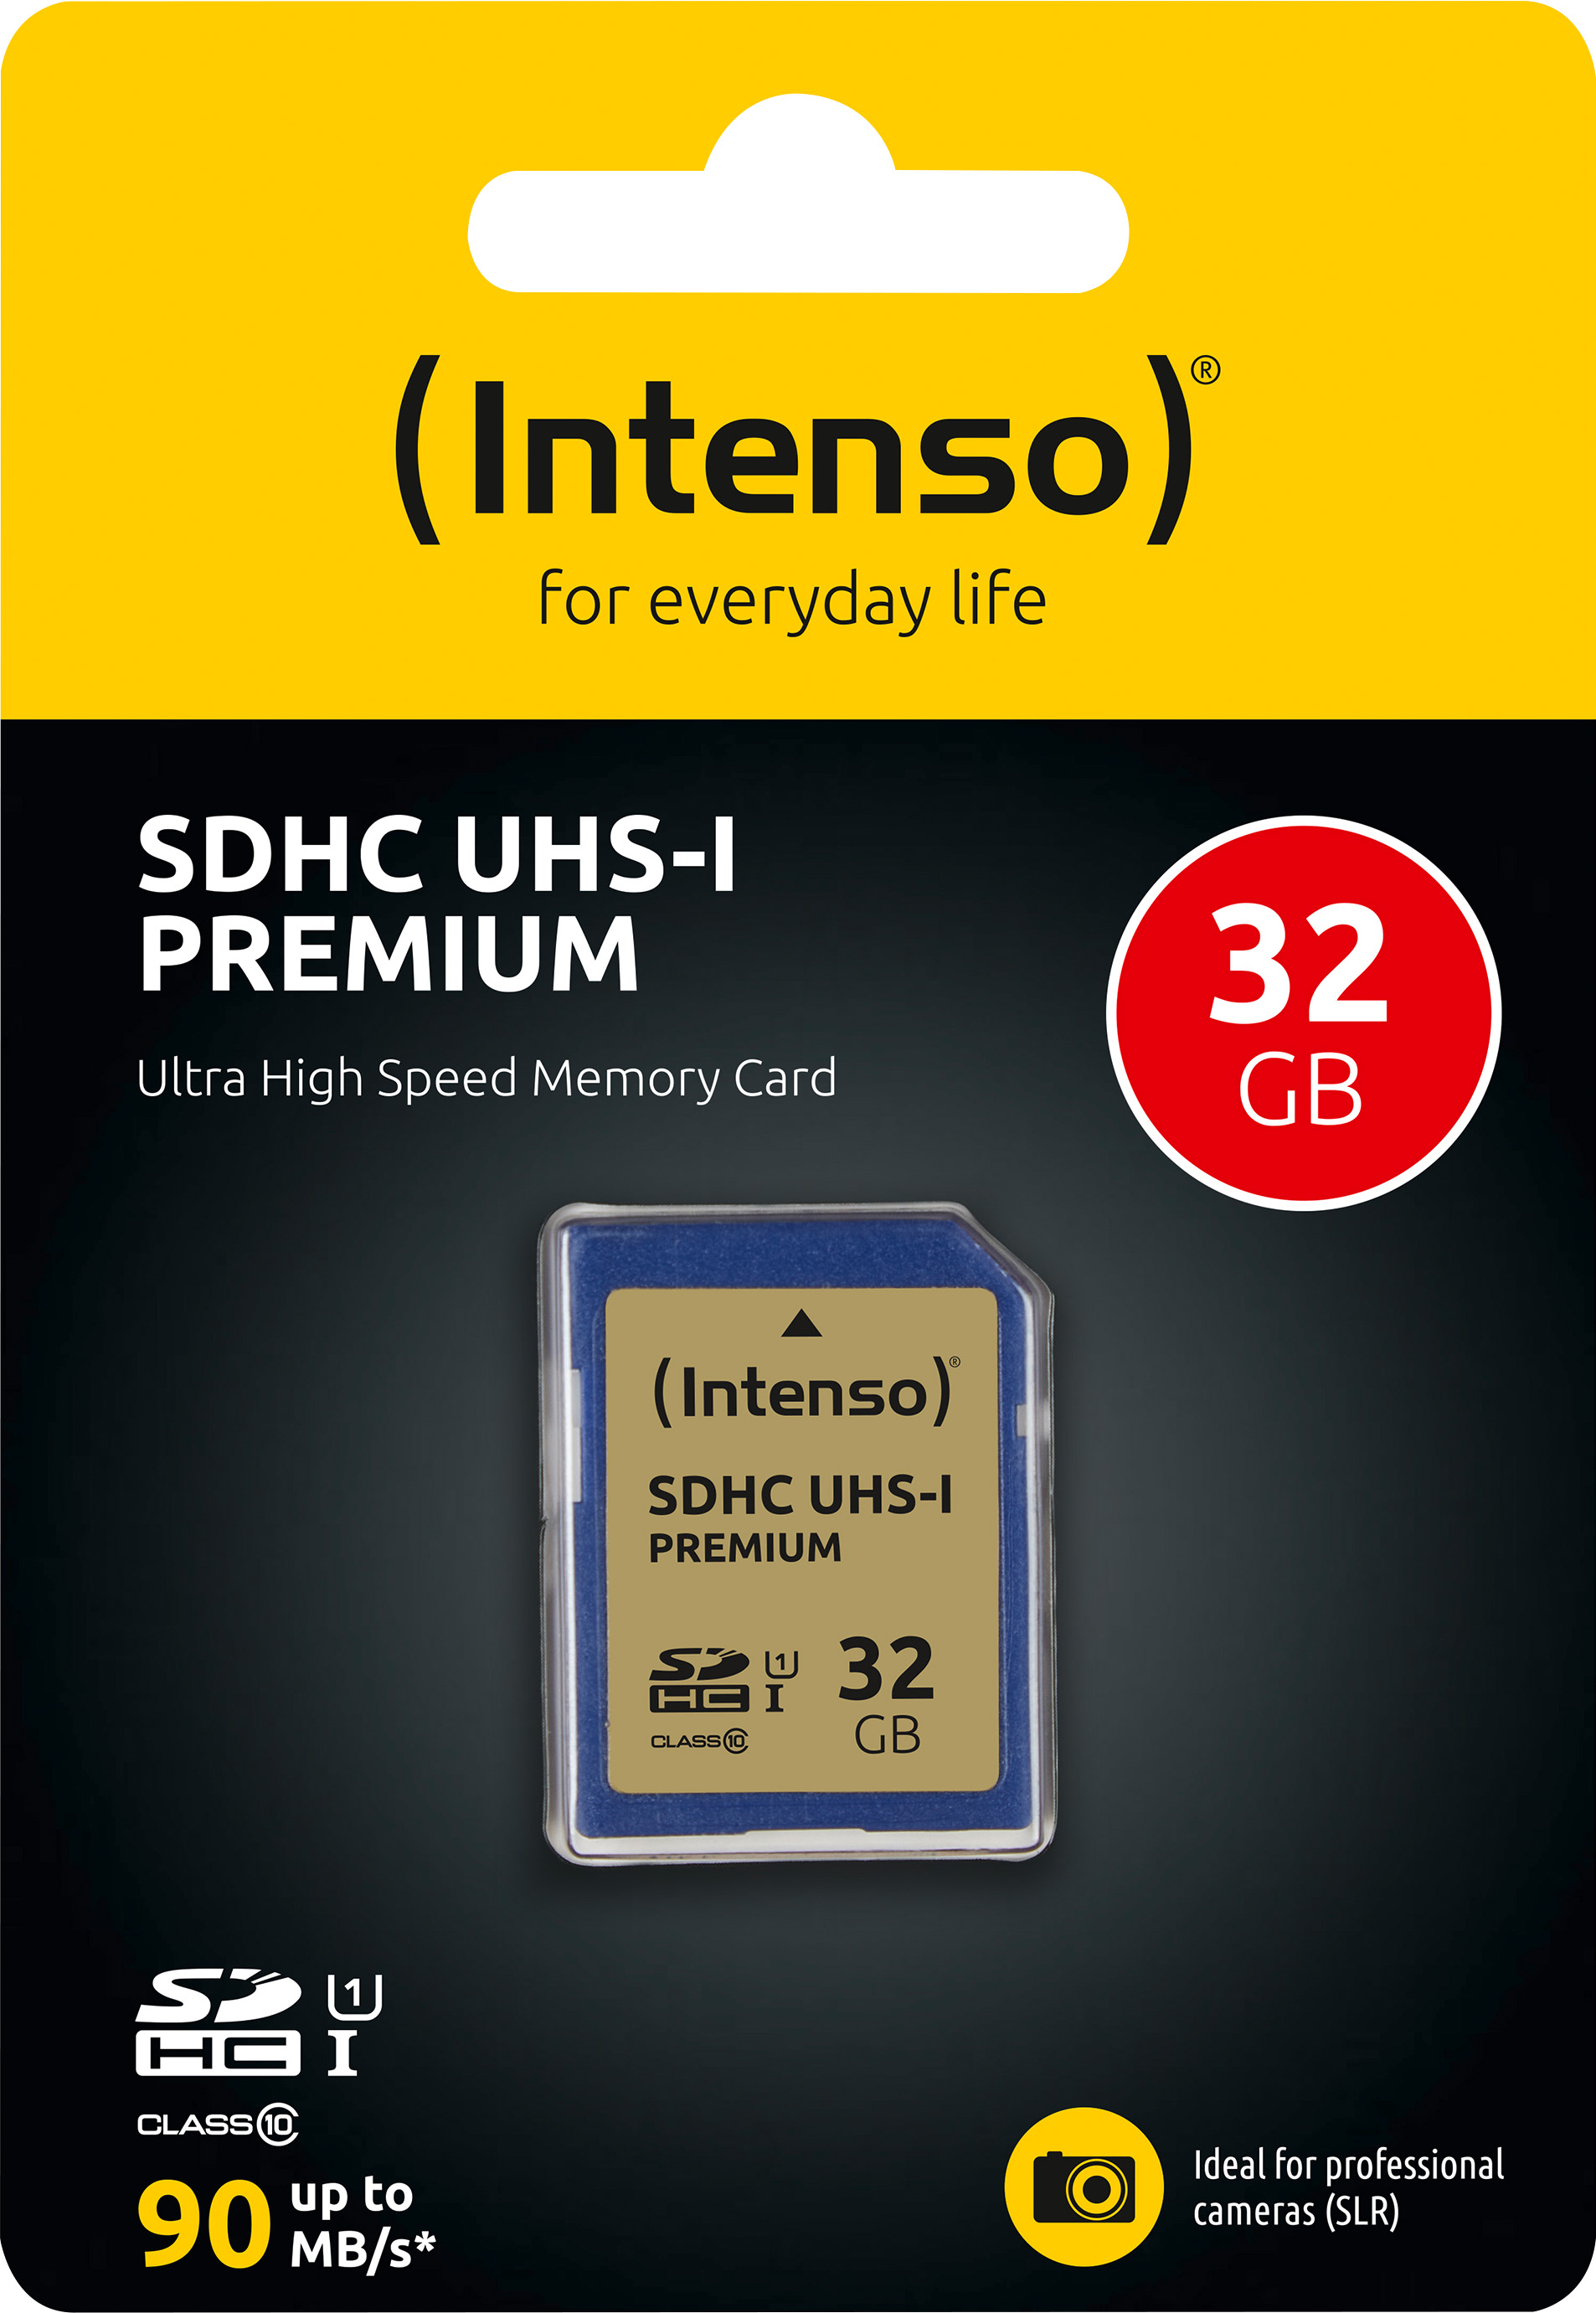 Intenso SDHC-Card 32GB, Premium, Class 10, U1, UHS-I (R) 90MB/s, (W) 10MB/s, Retail-Blister